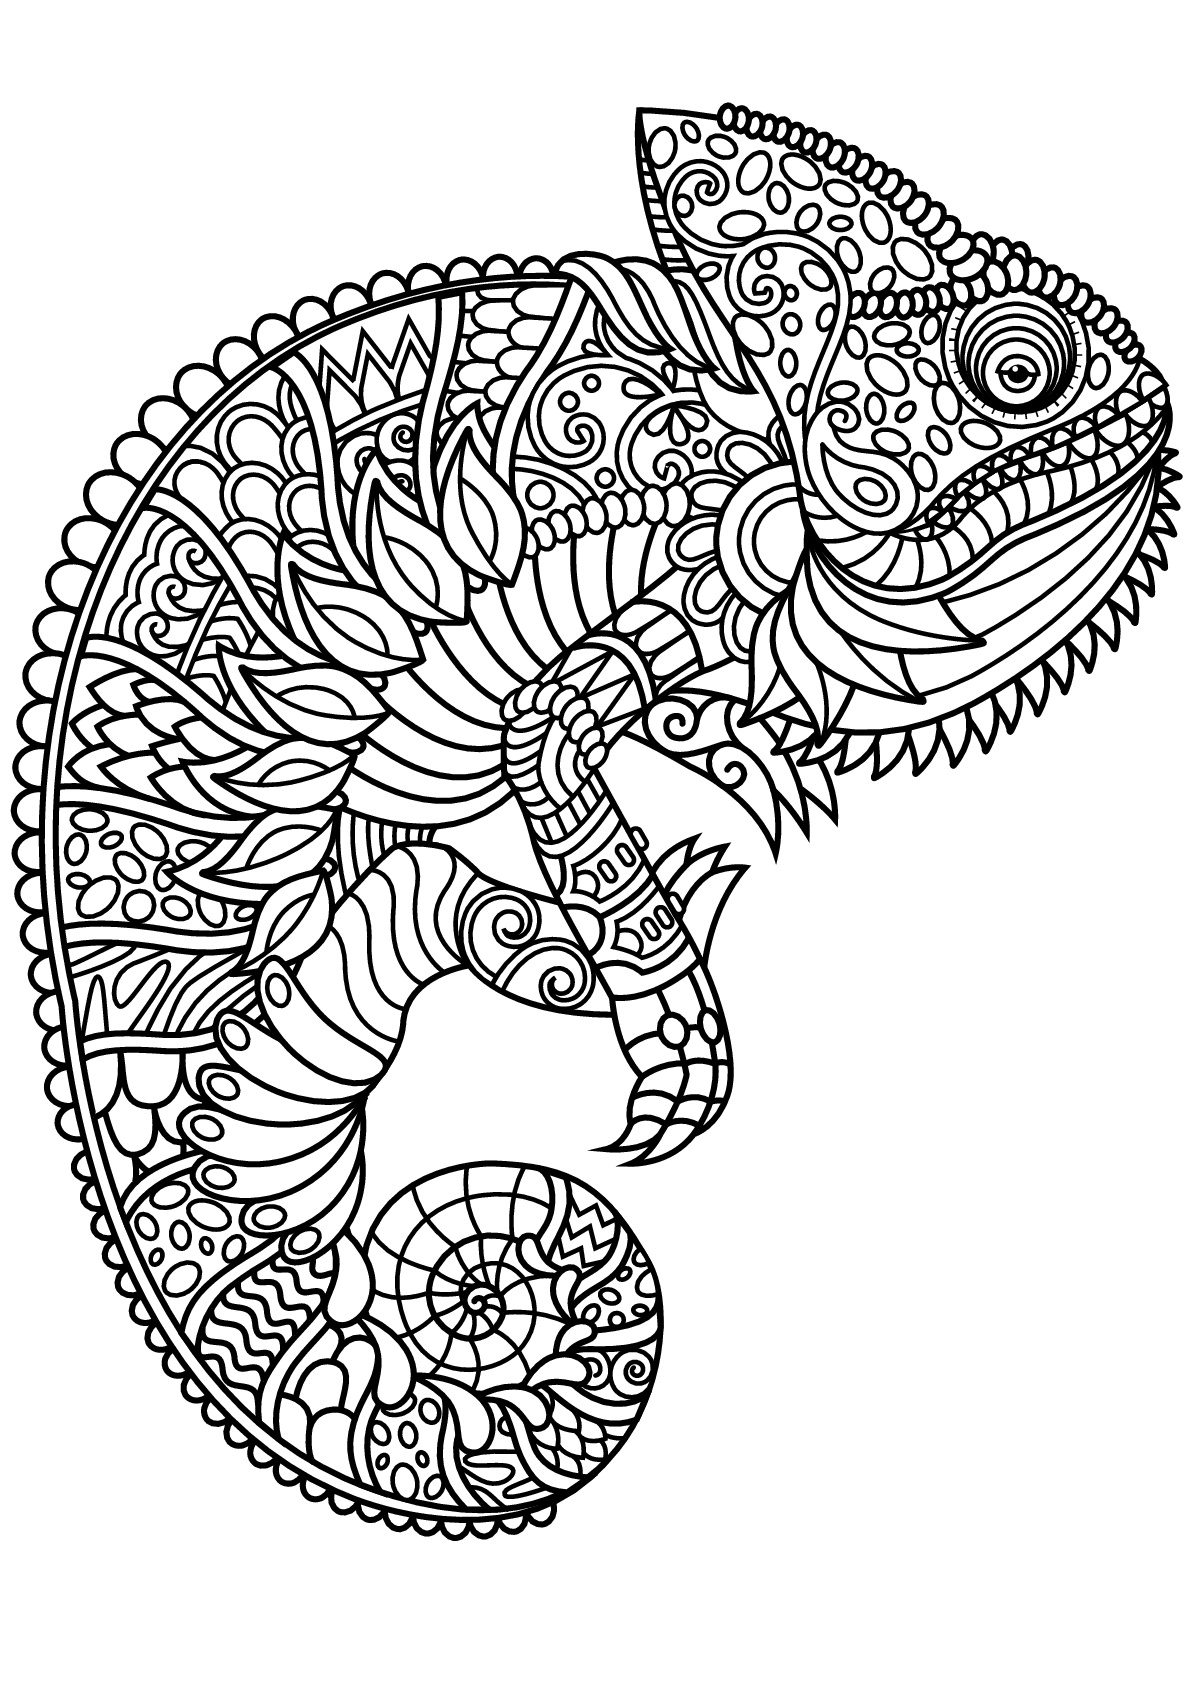 Download Free book chameleon - Chameleons & lizards Adult Coloring Pages